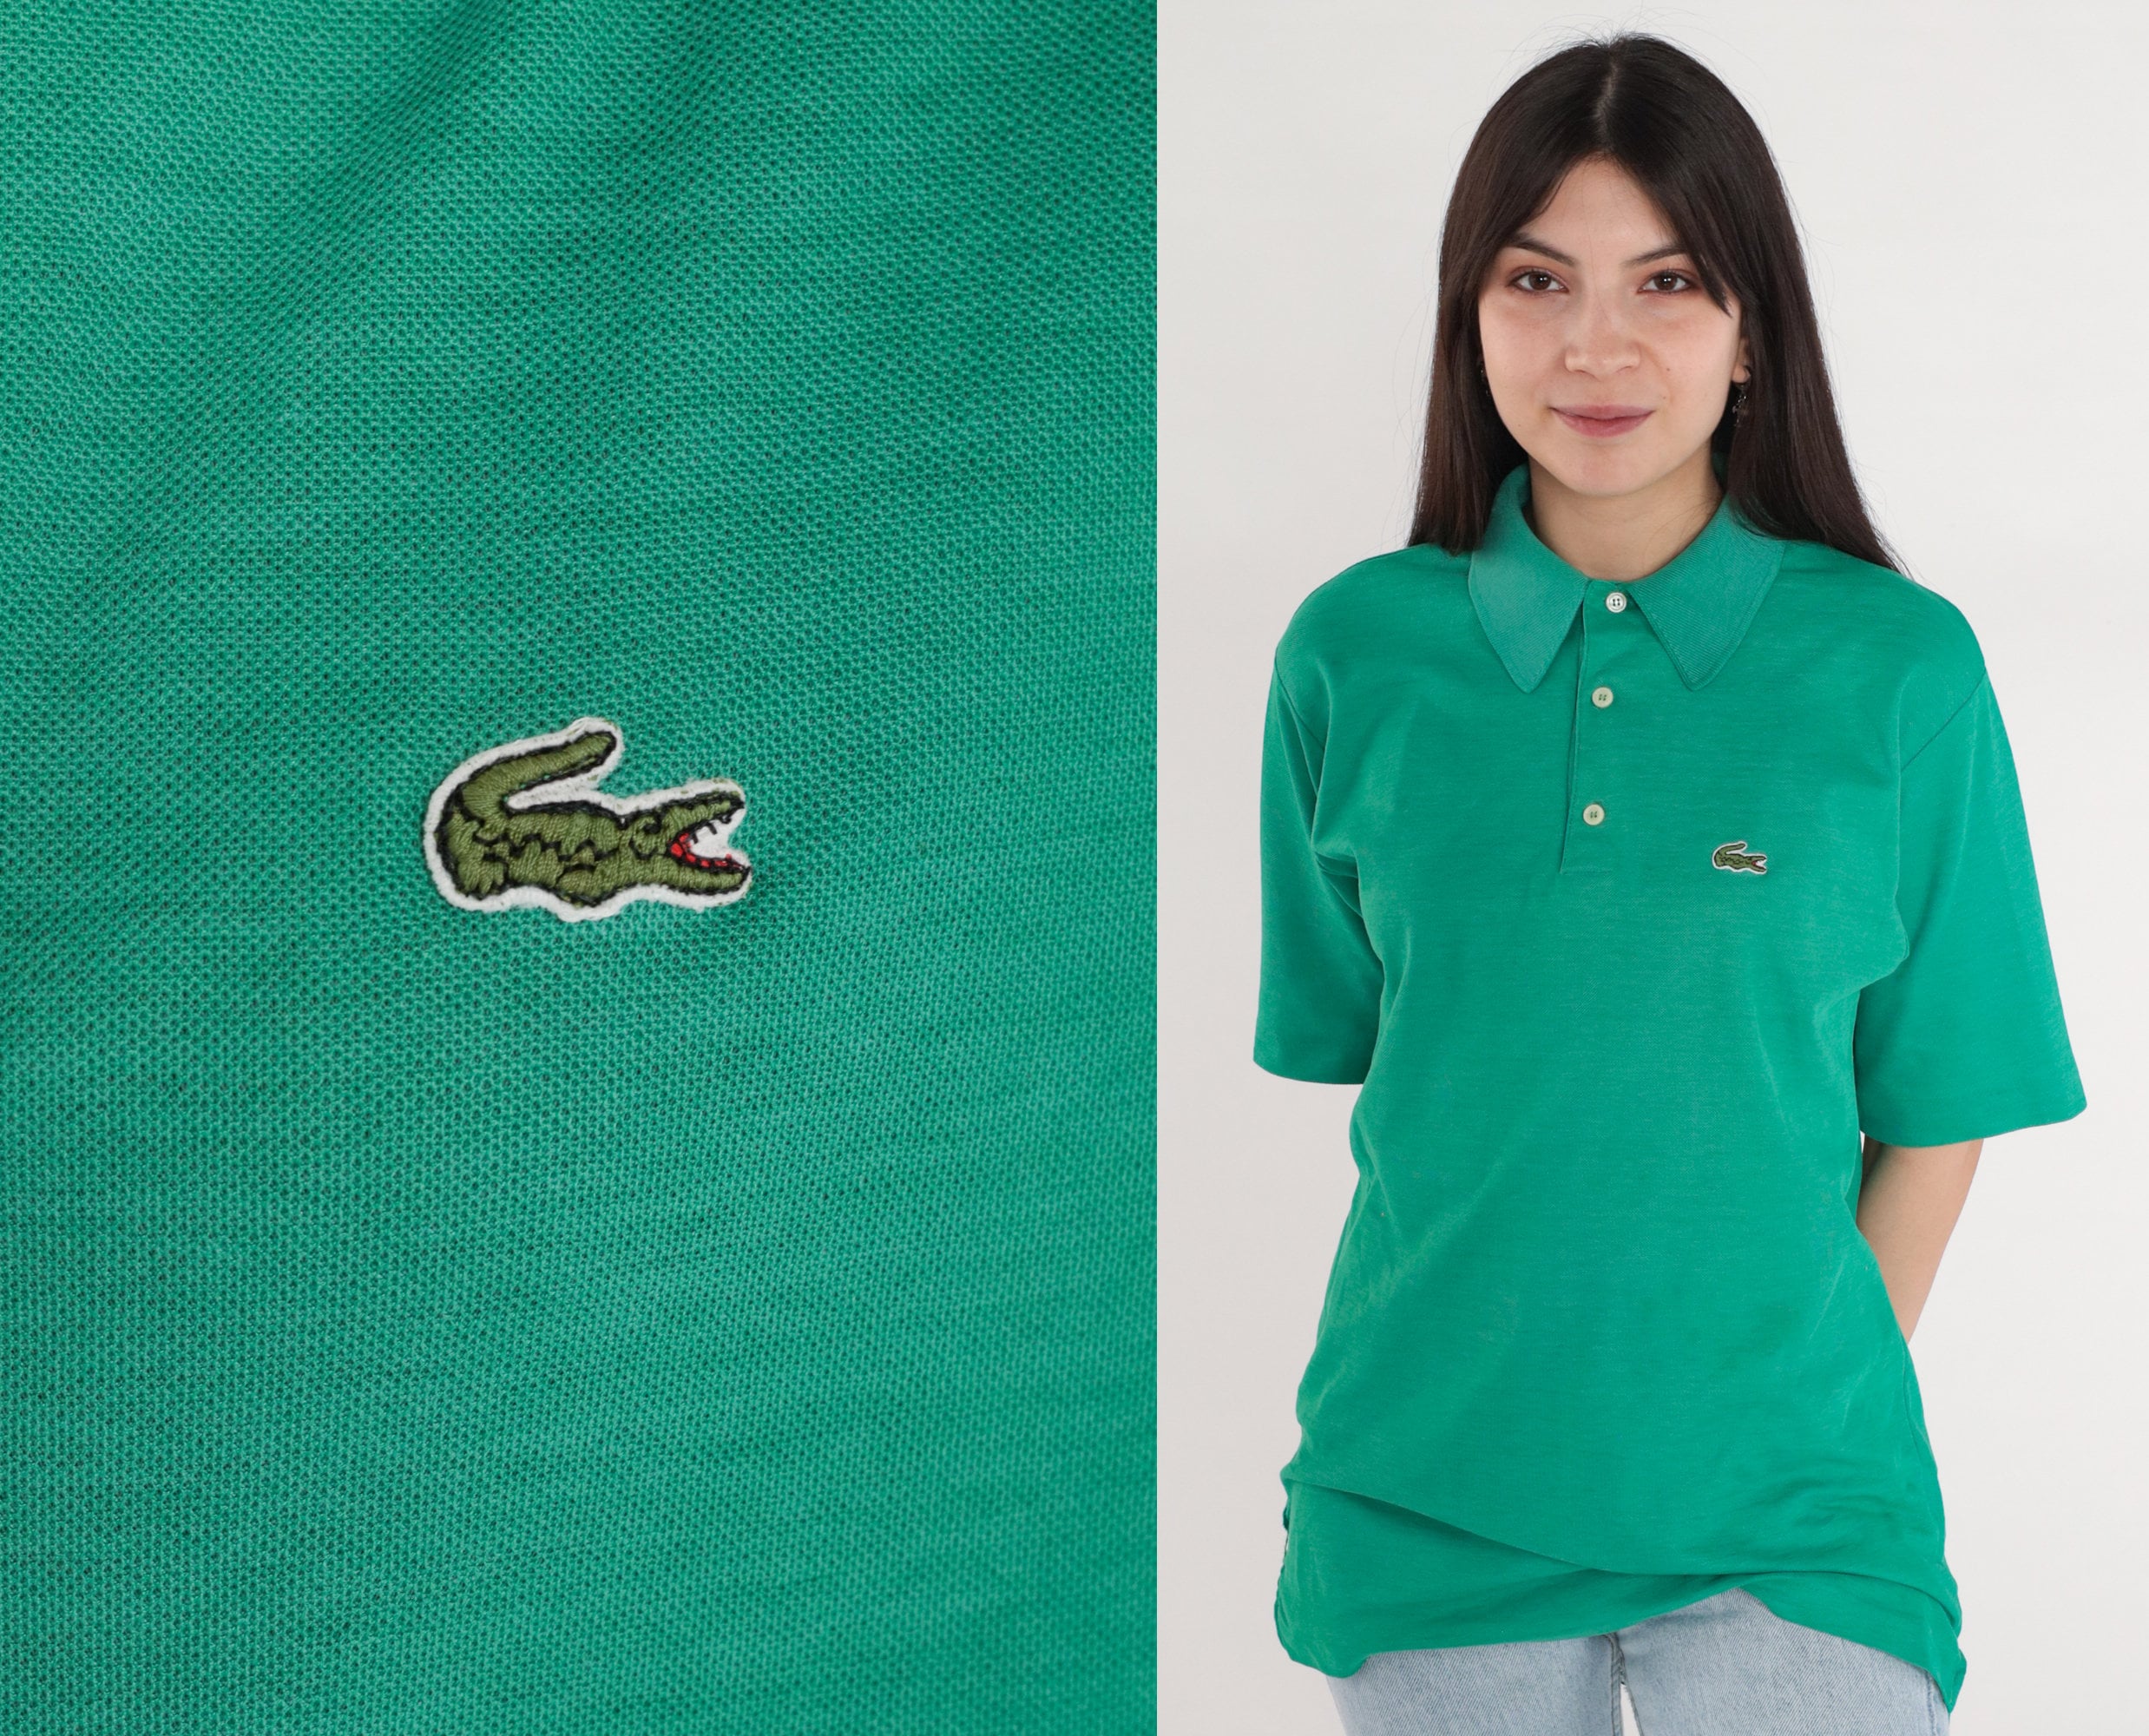 Lacoste Polo Shirt Green Collared Shirt Izod Crocodile T-Shirt Retro Preppy Collar Top Basic Simple Plain Vintage 1980s Medium